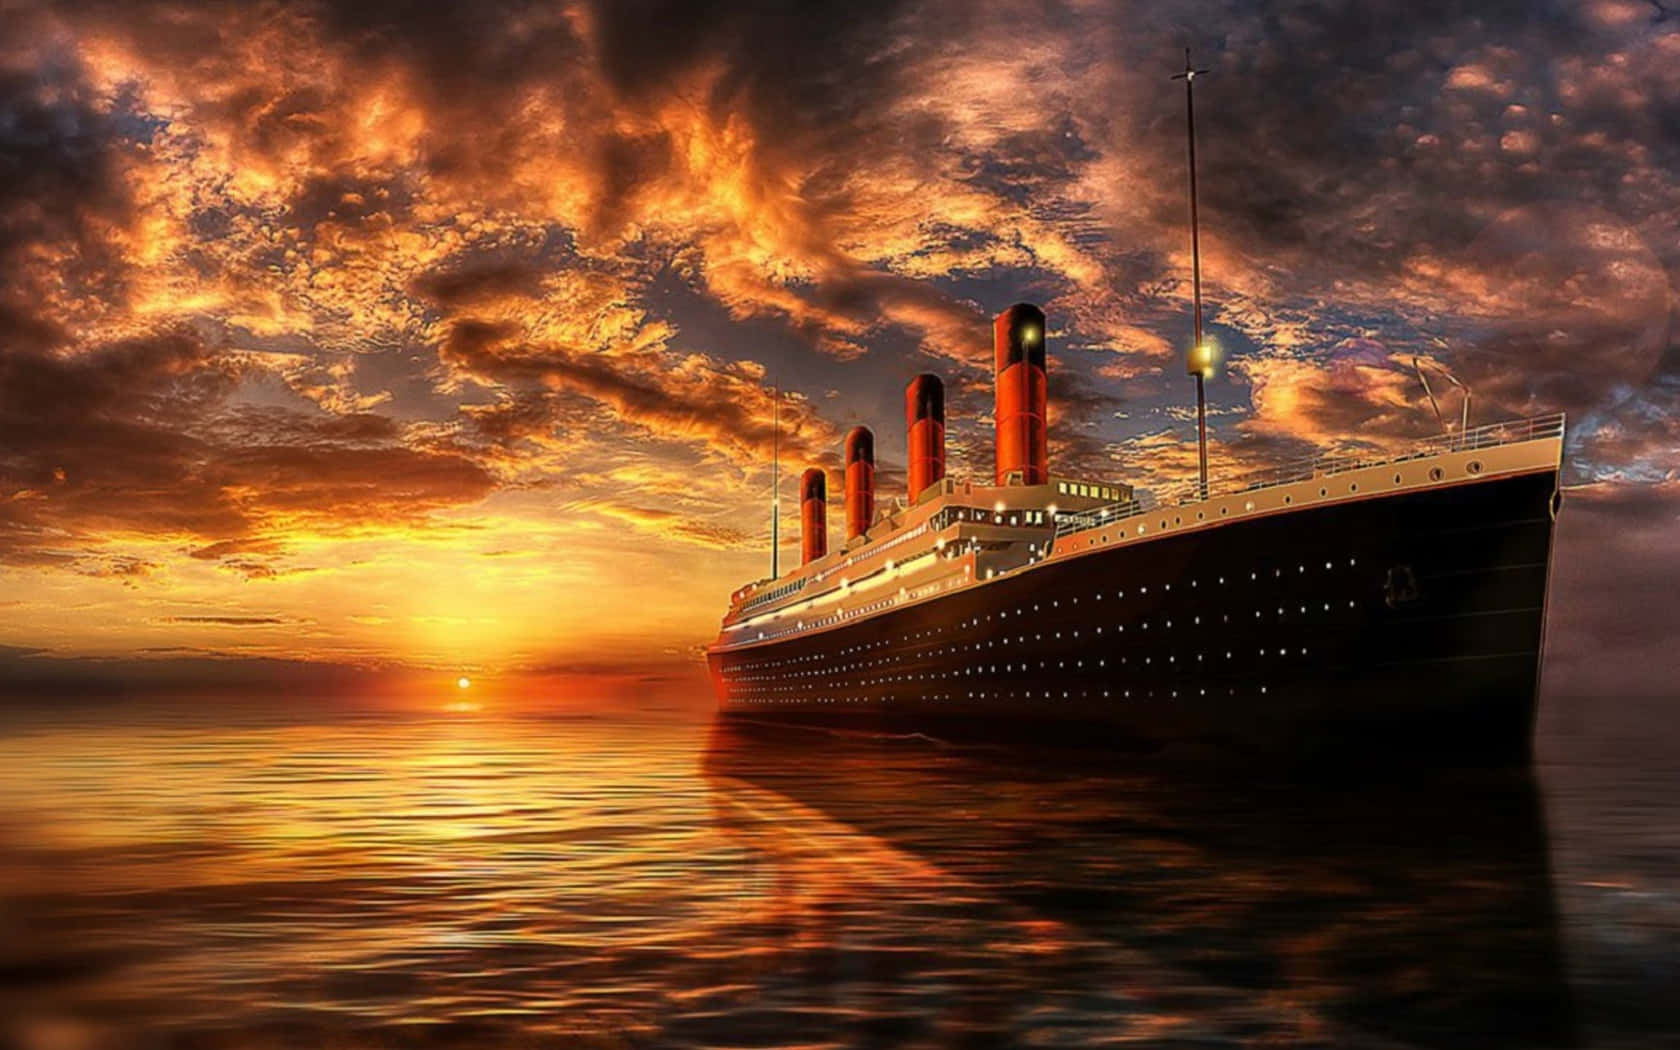 Titanic departing on her maiden voyage